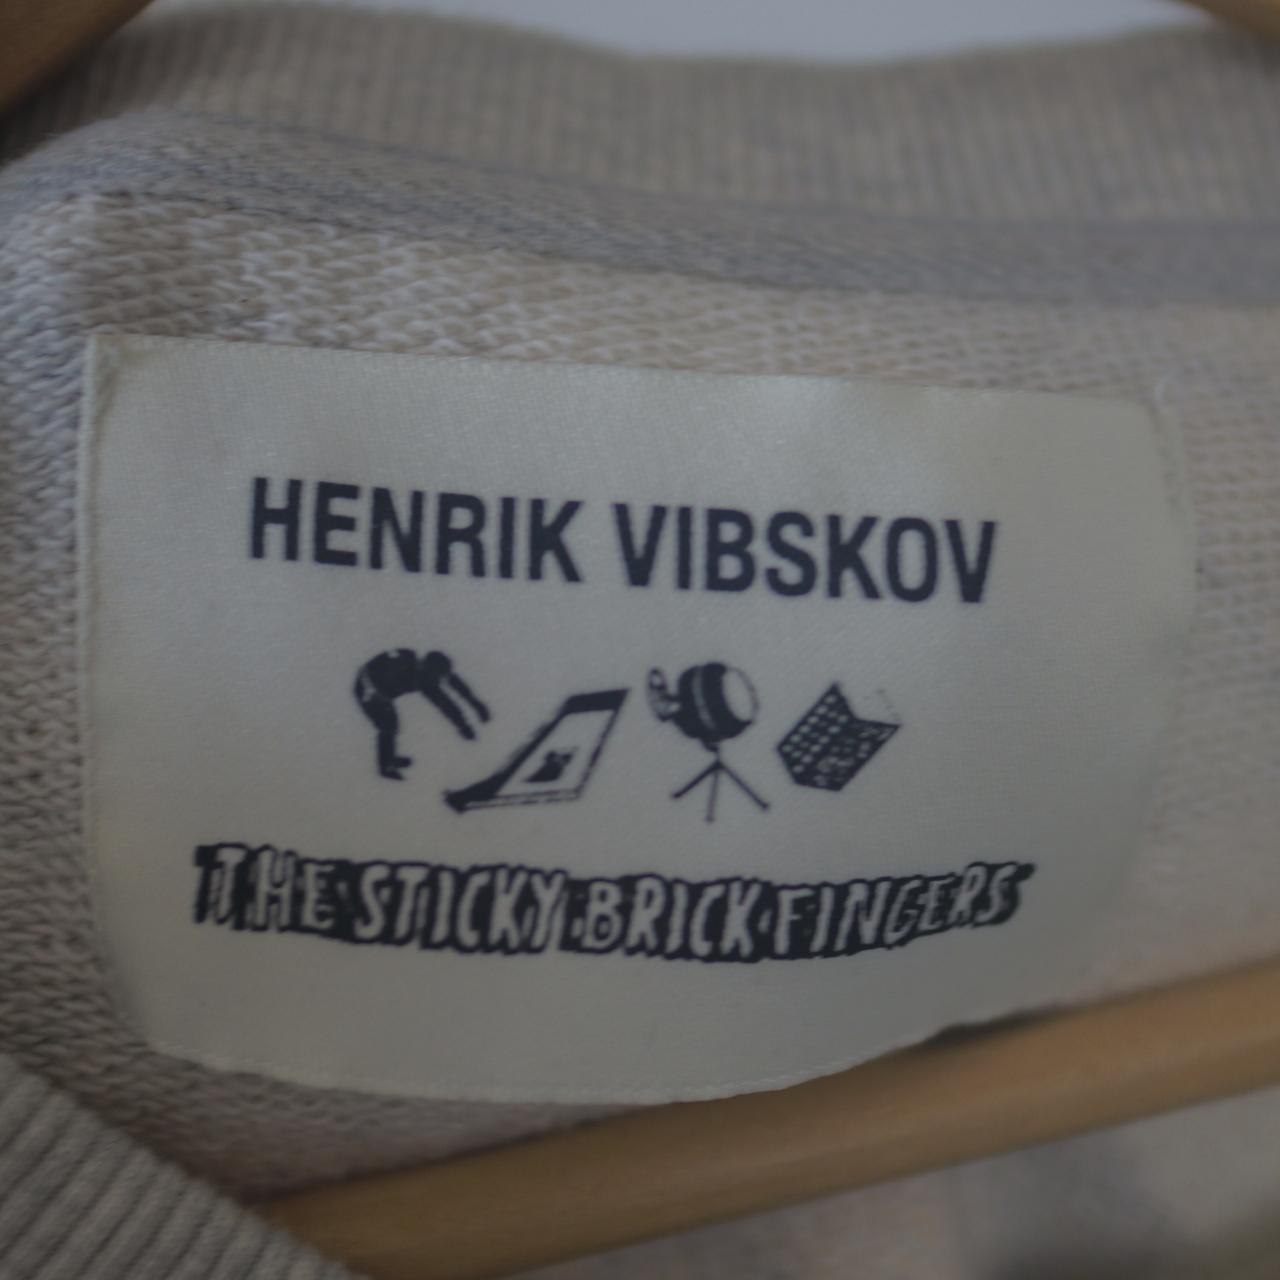 Product Image 3 - Henrik Vibskov printed Sweater. The